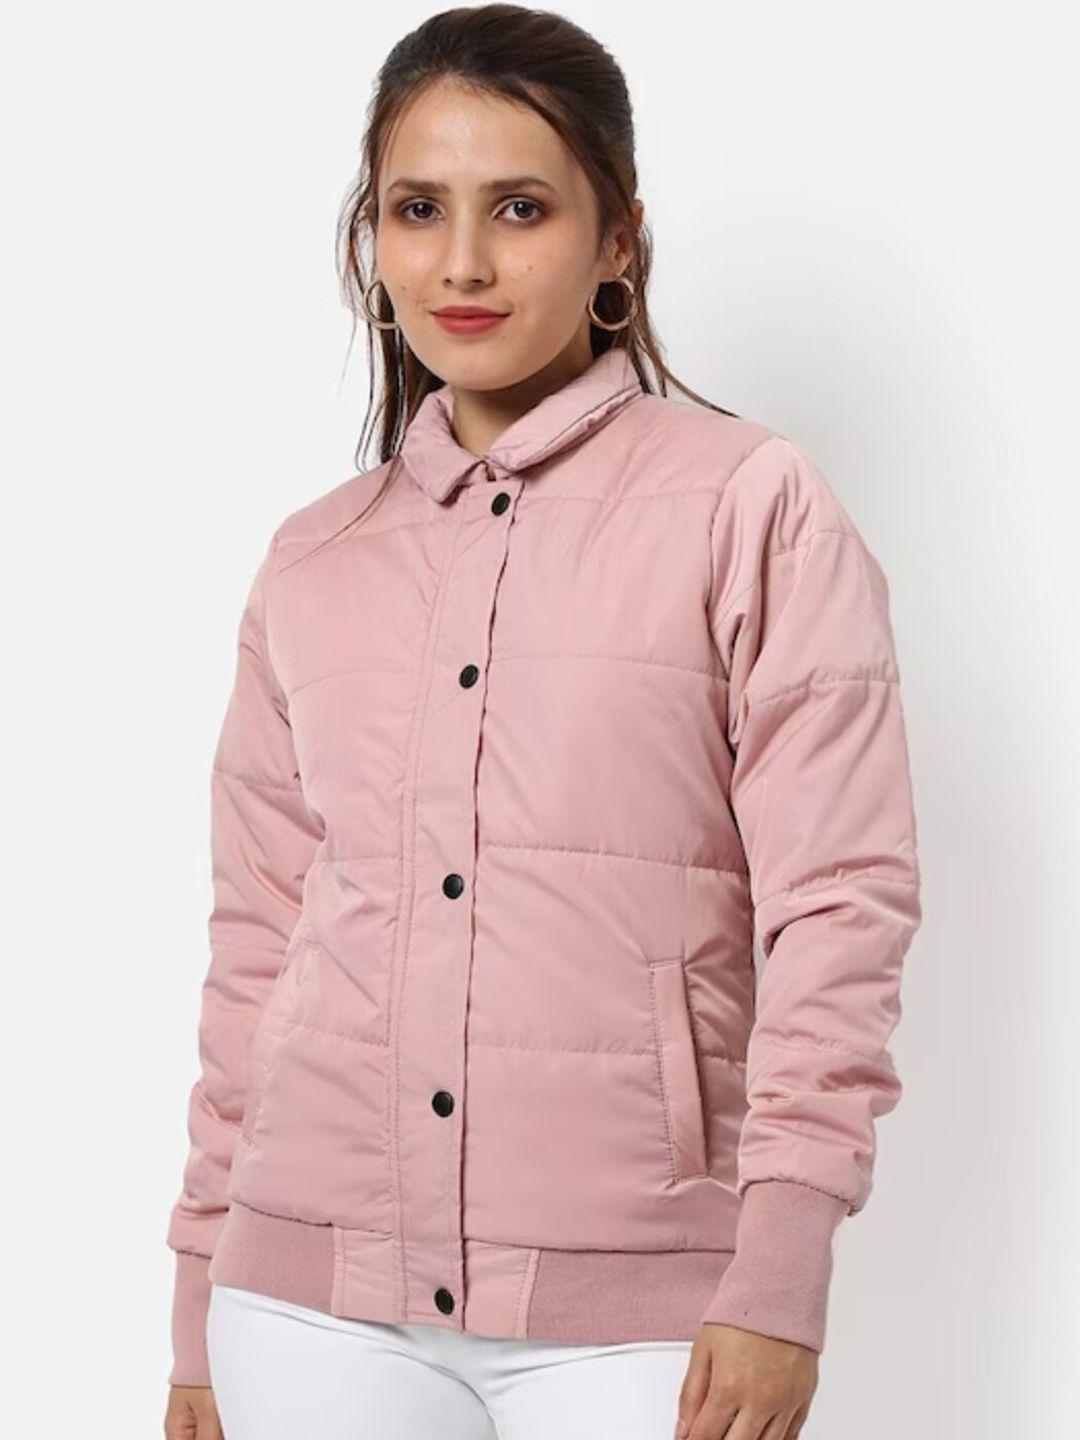 Campus Sutra Pink Spread Collar Windcheater Puffer Jacket